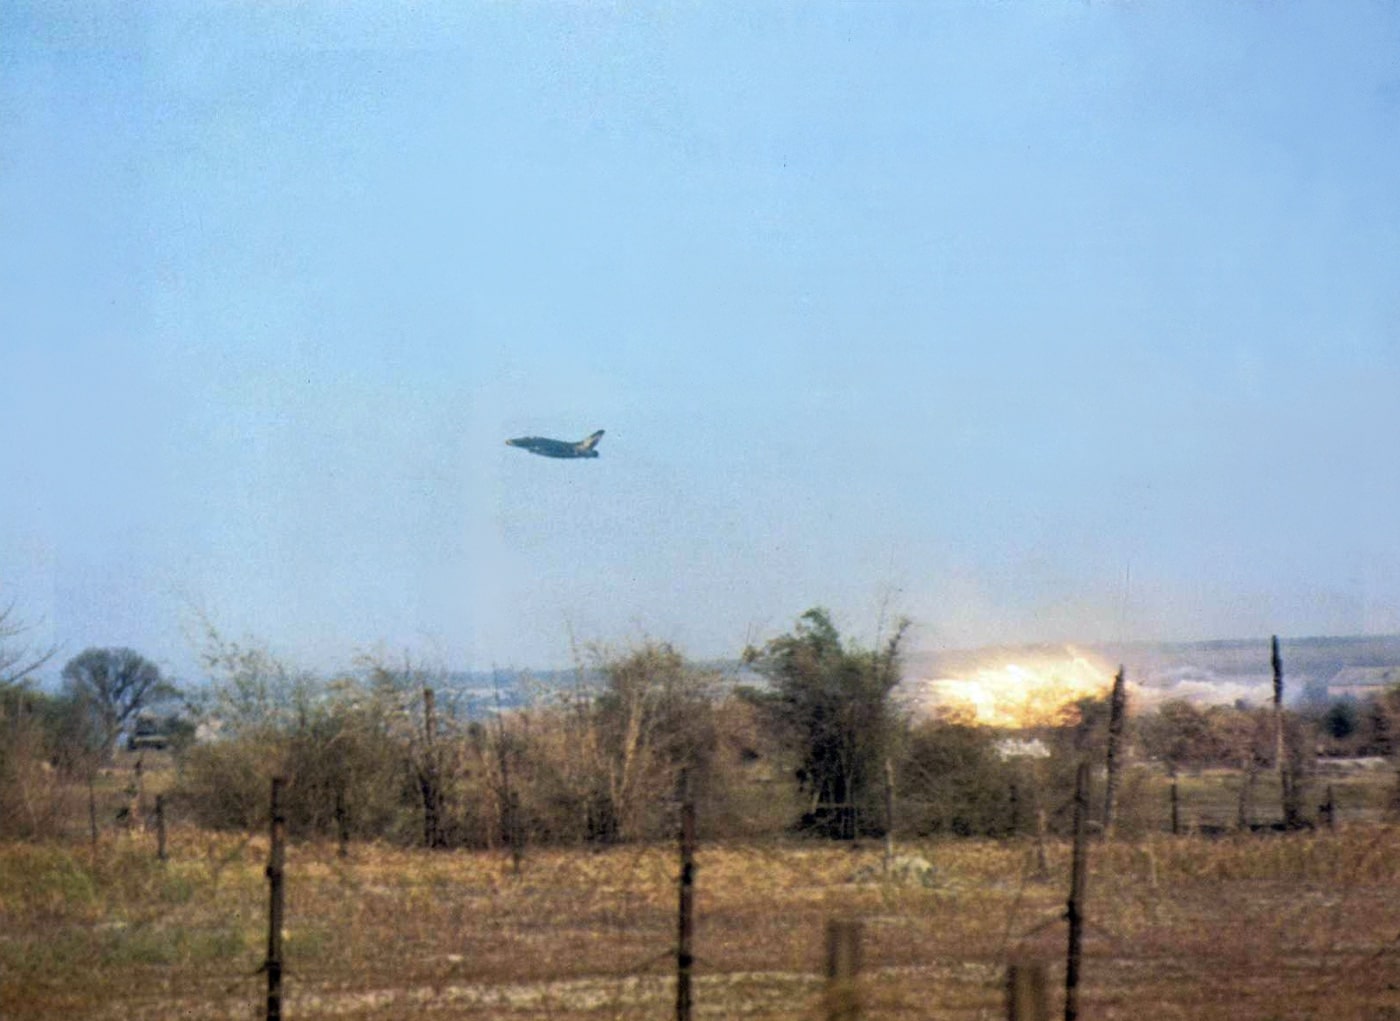 f-100d drops bomb in vietnam during war 1968